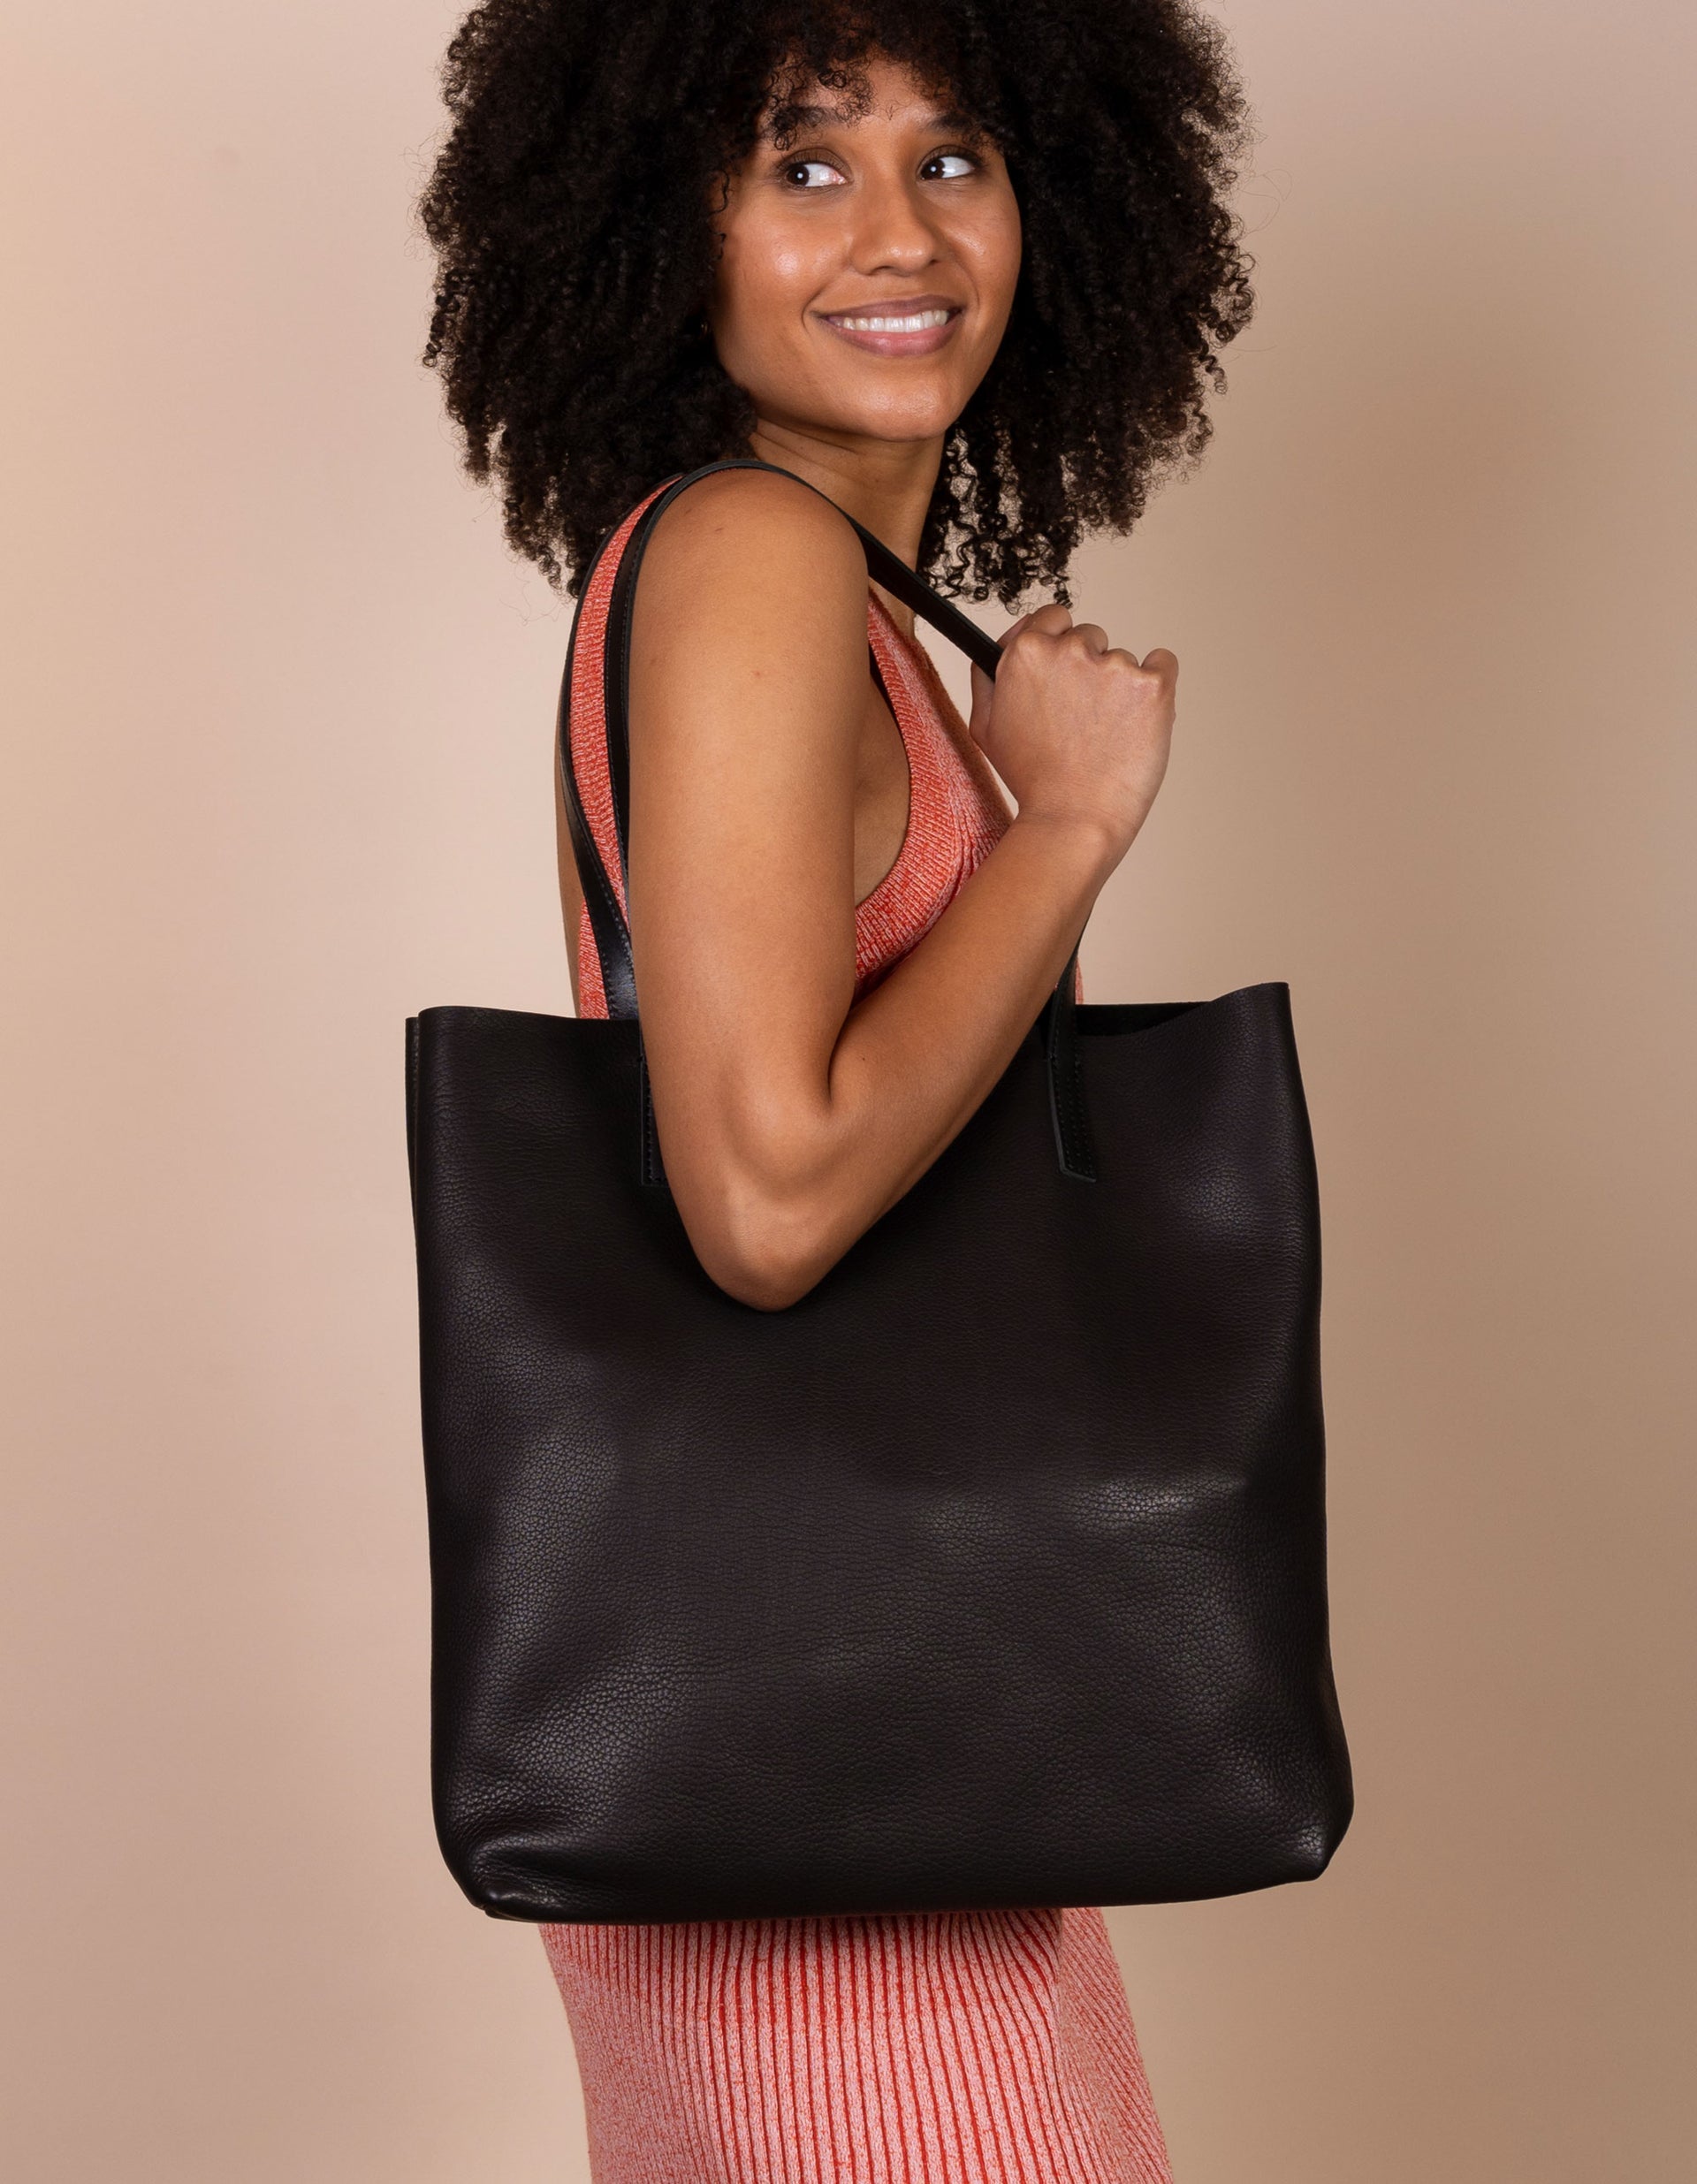 Georgia - Black Leather shopper bag. Female product image.